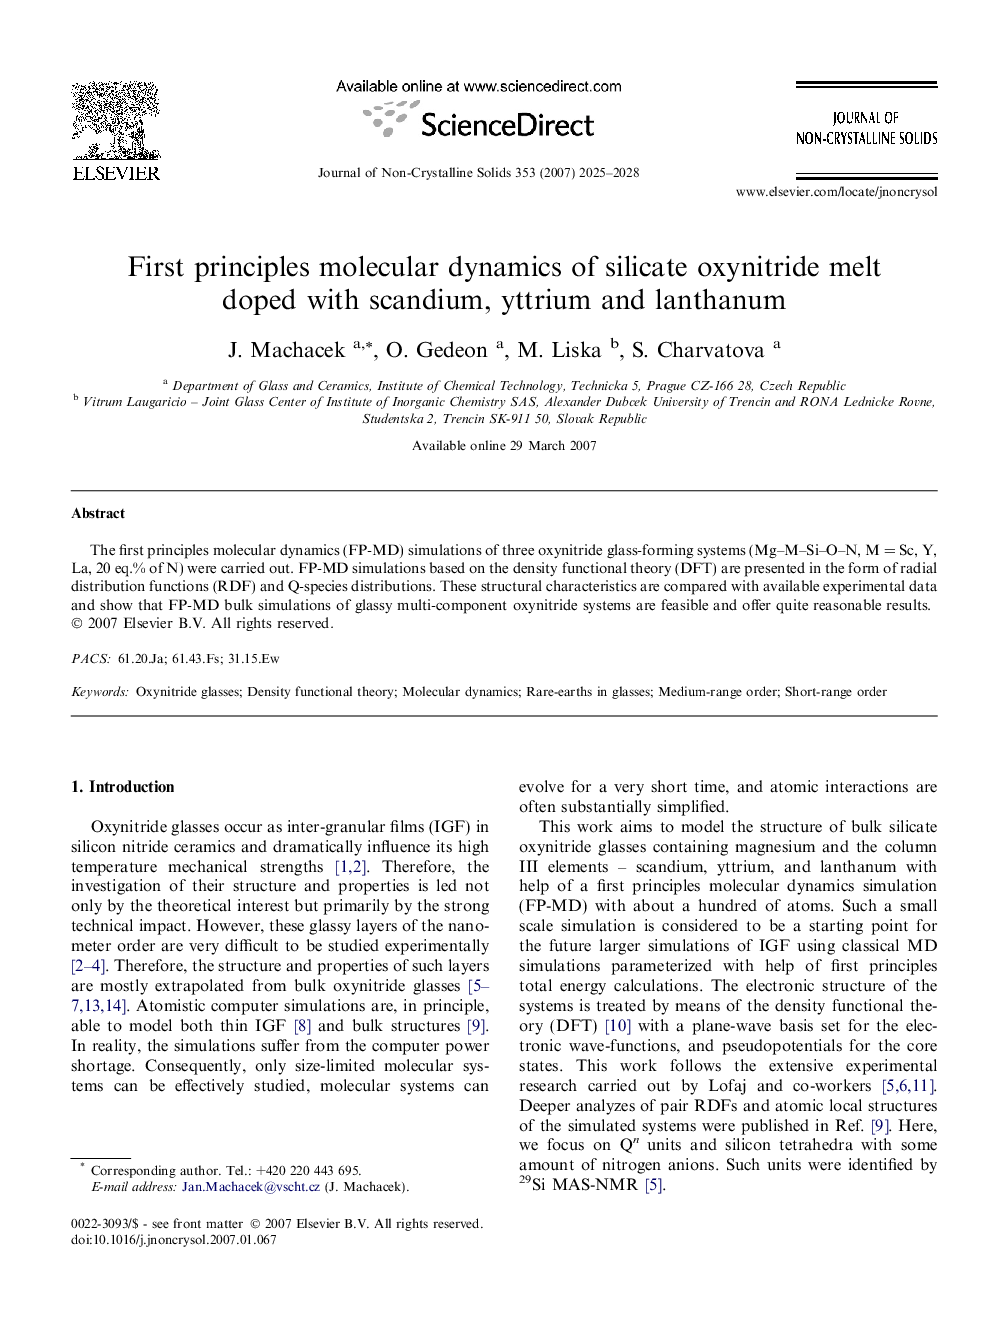 First principles molecular dynamics of silicate oxynitride melt doped with scandium, yttrium and lanthanum